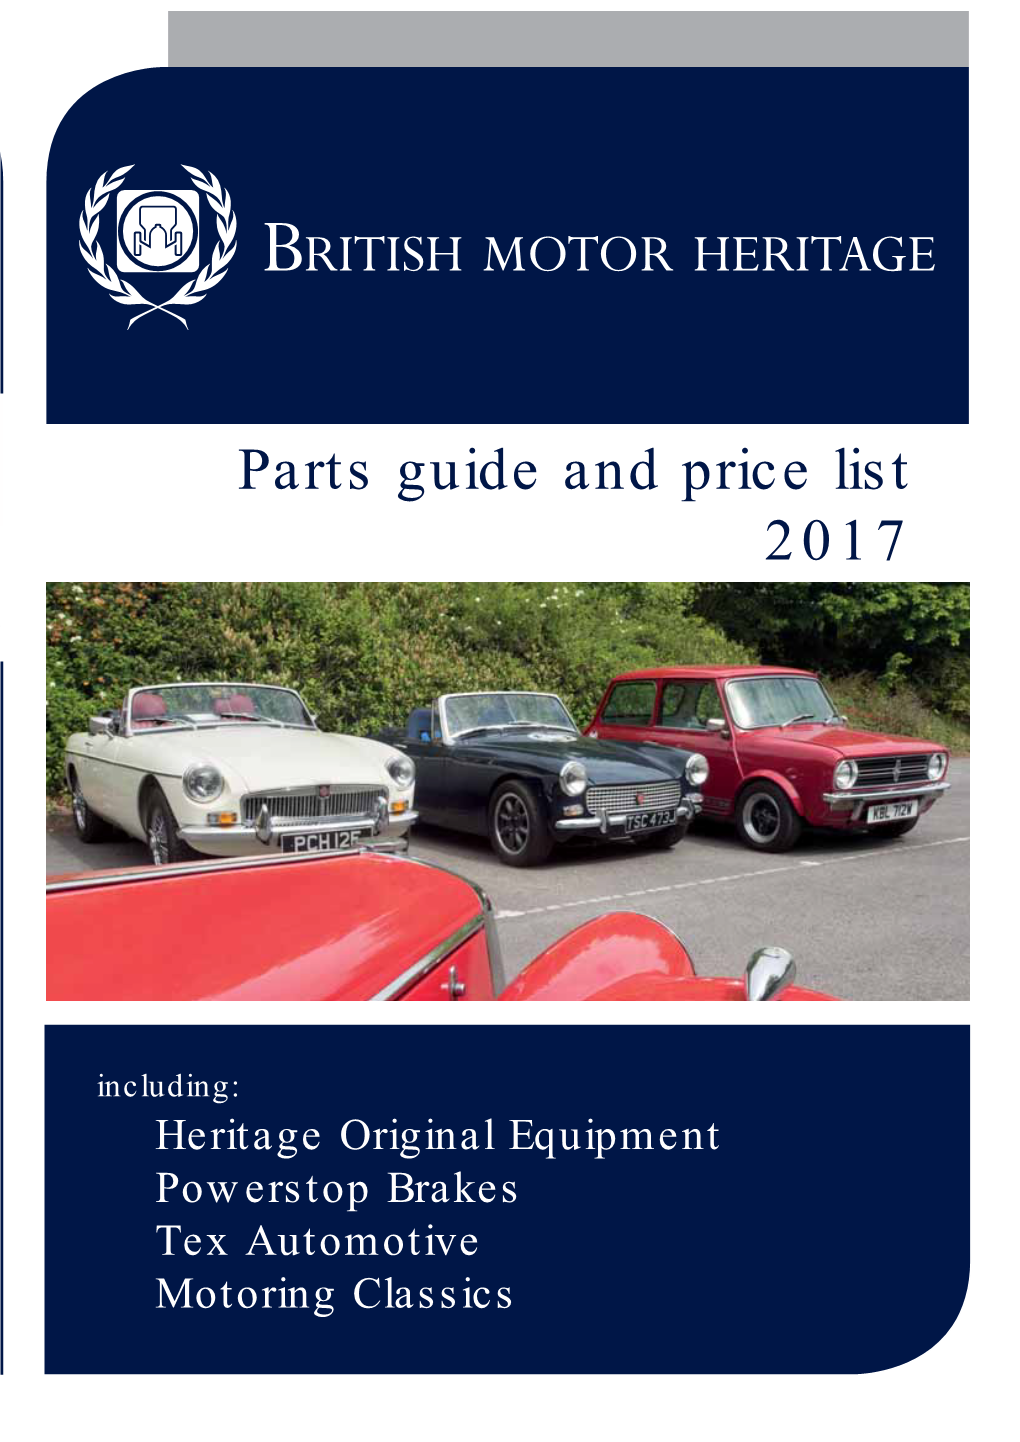 British Motor Heritage Limited